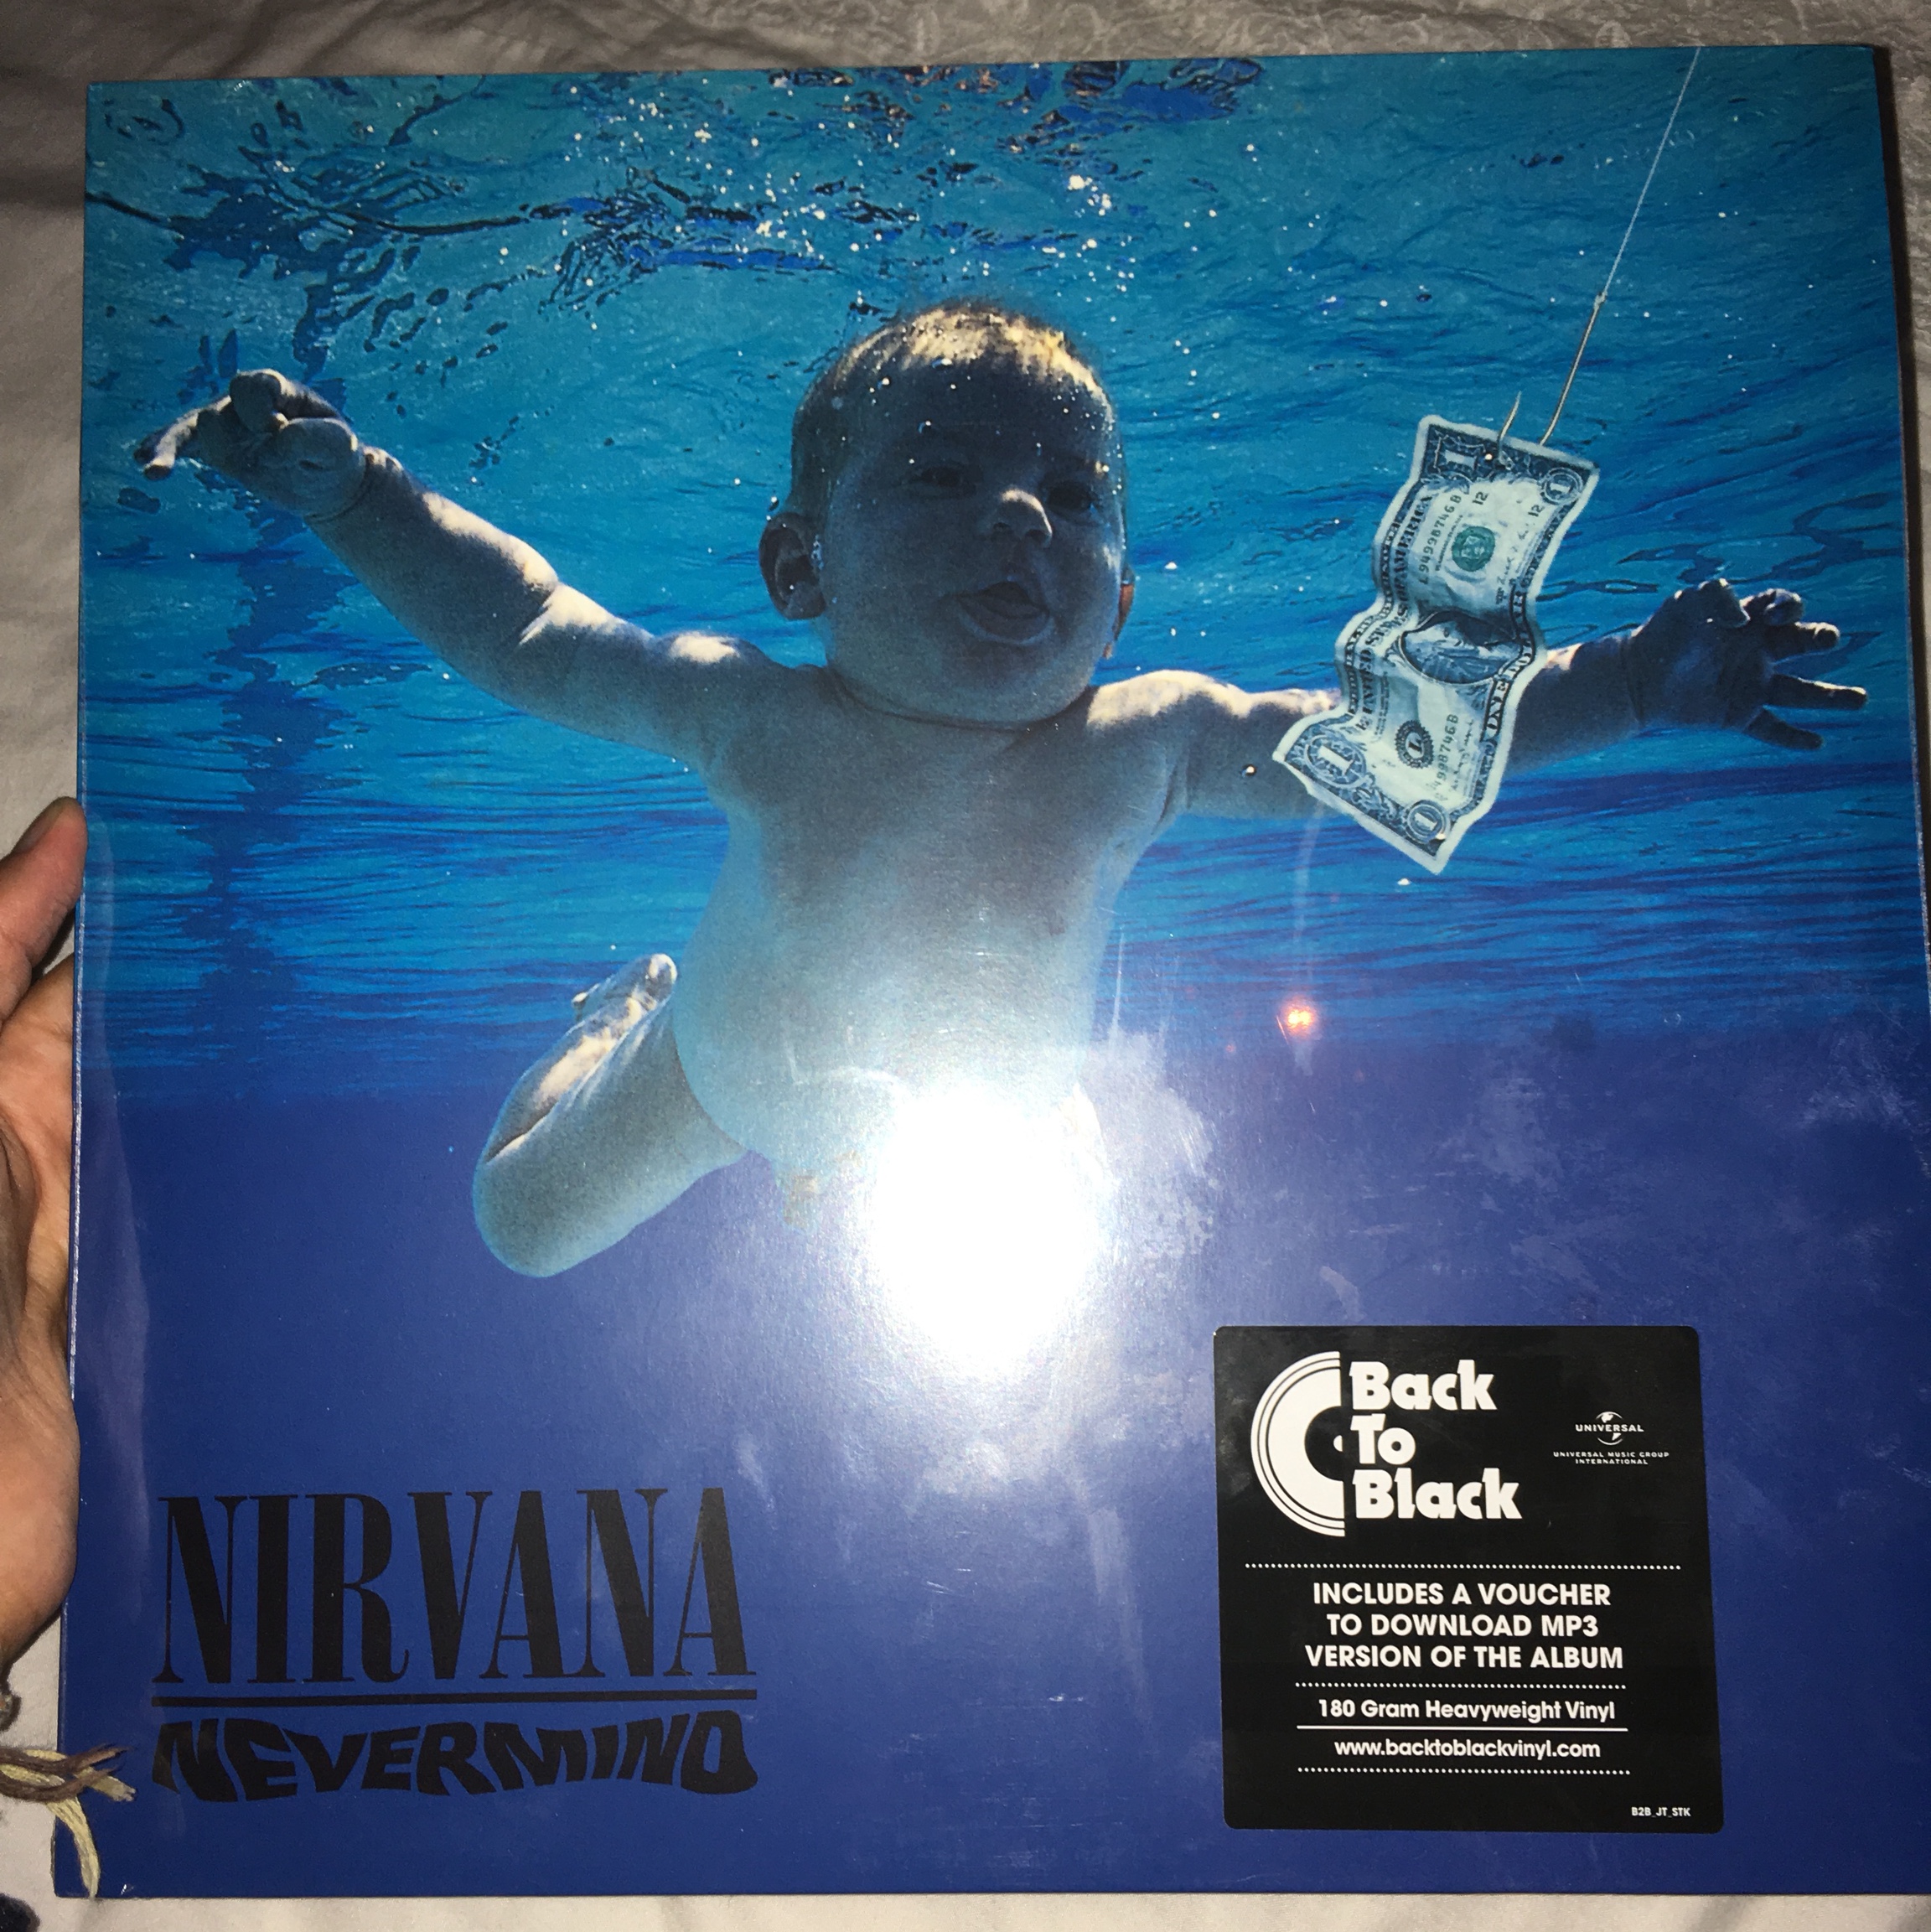 Nirvana Nevermind Full Album Download - motorilida